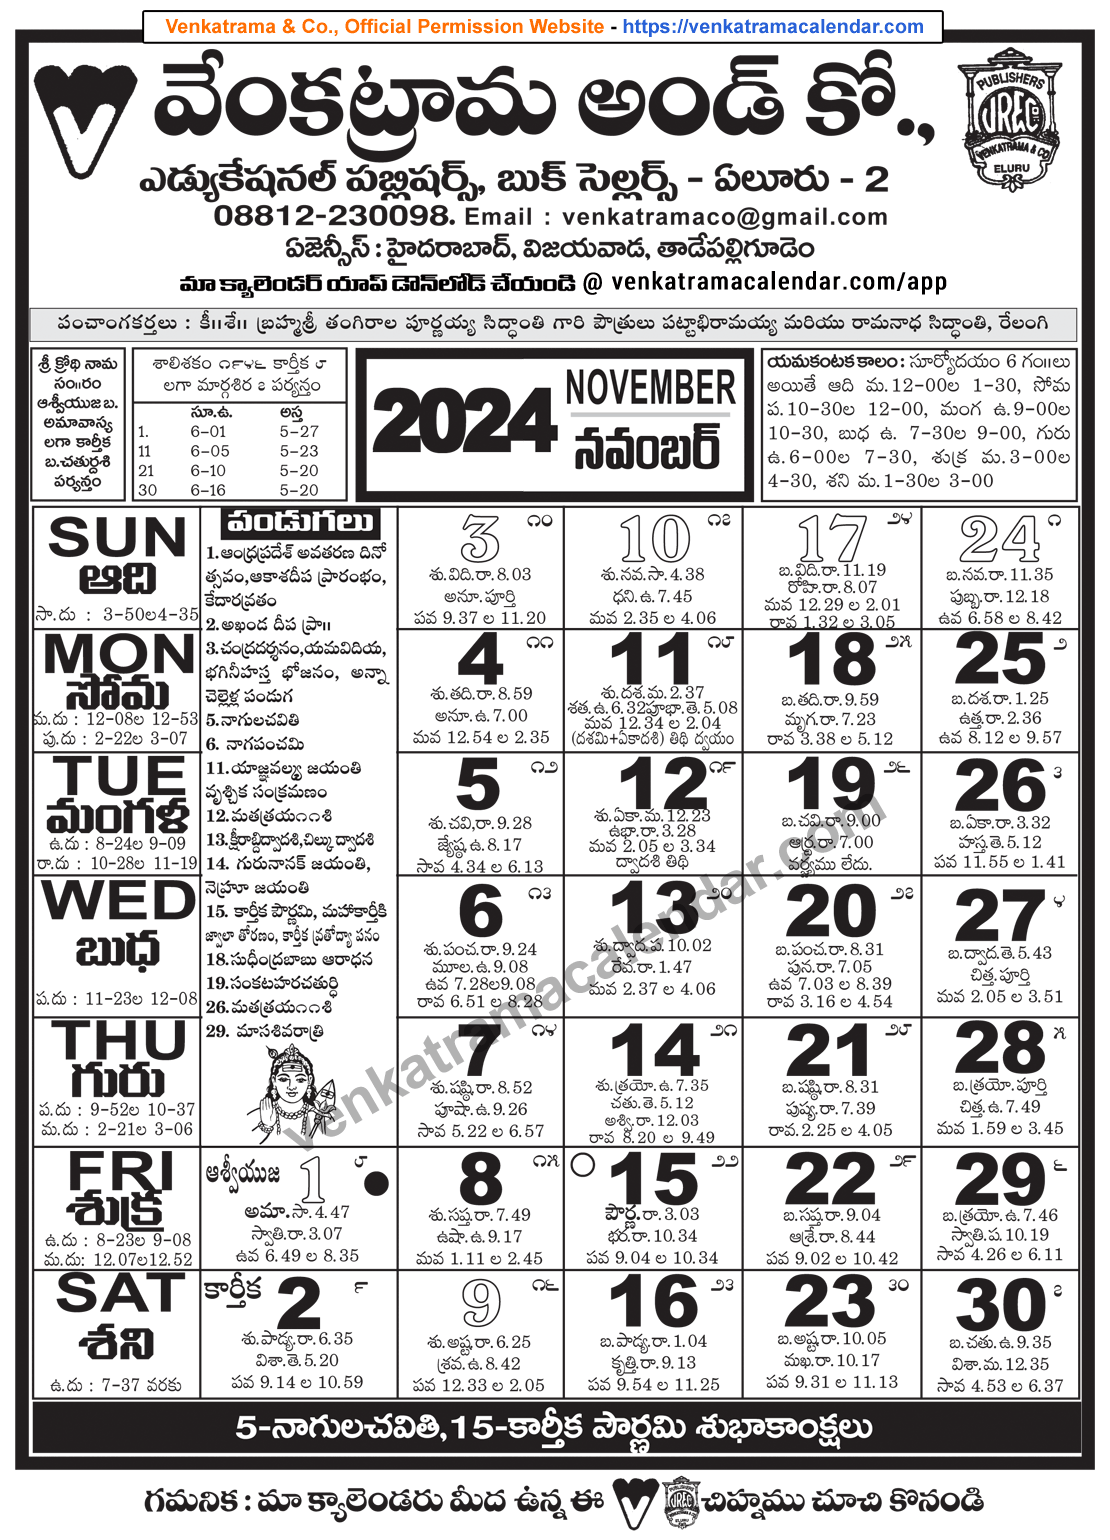 Venkatrama Telugu Calendar 2024 November Venkatrama Telugu Calendar